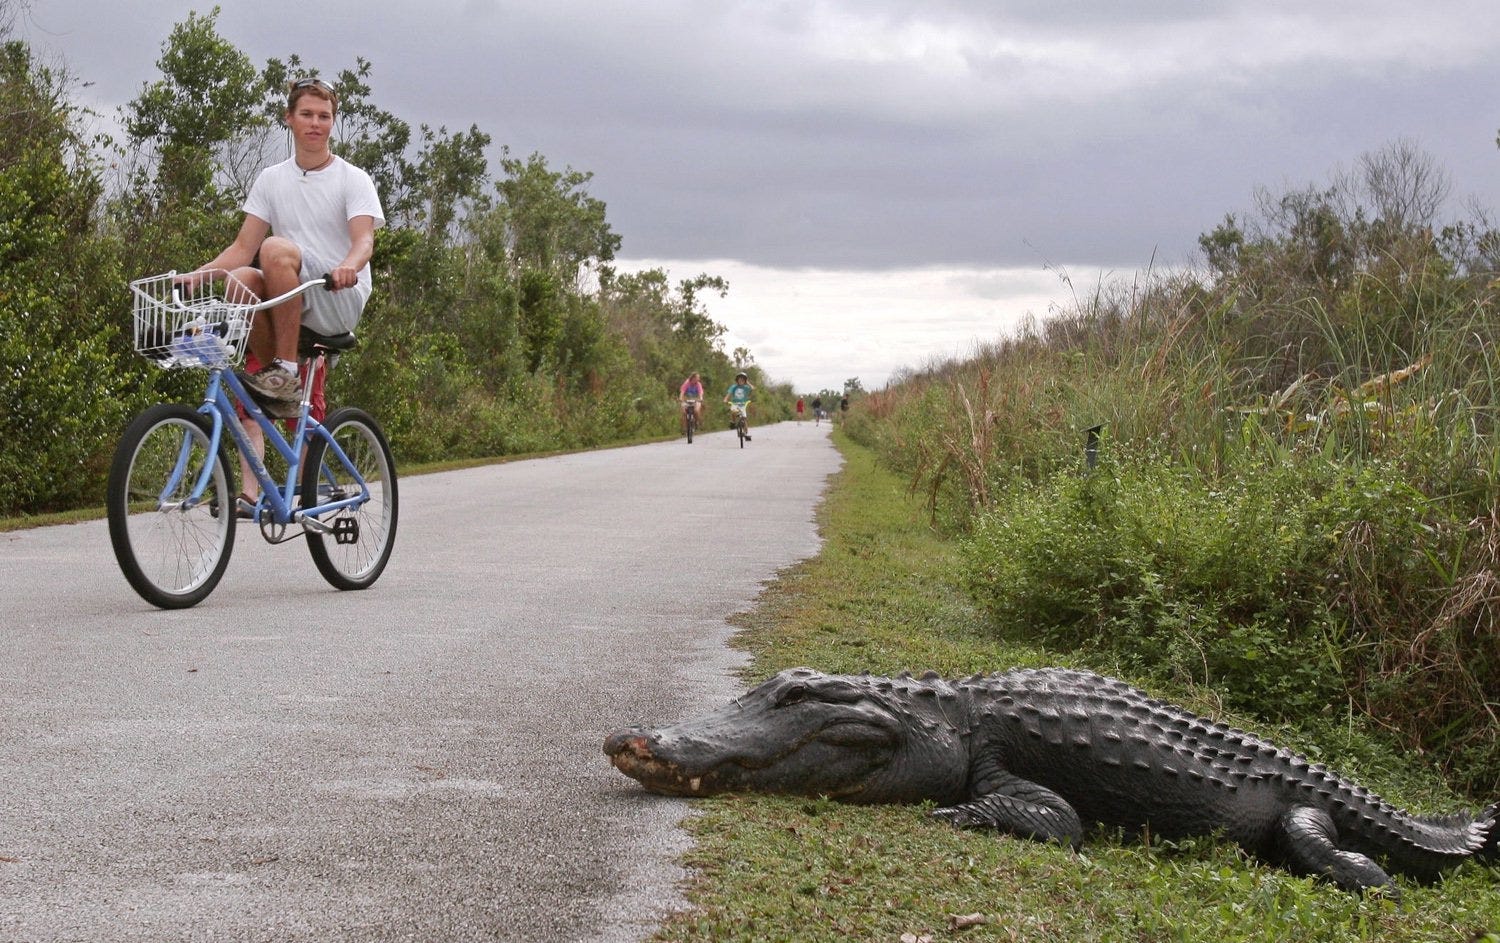 Everglades National Park: 5 reasons you should visit this Florida park